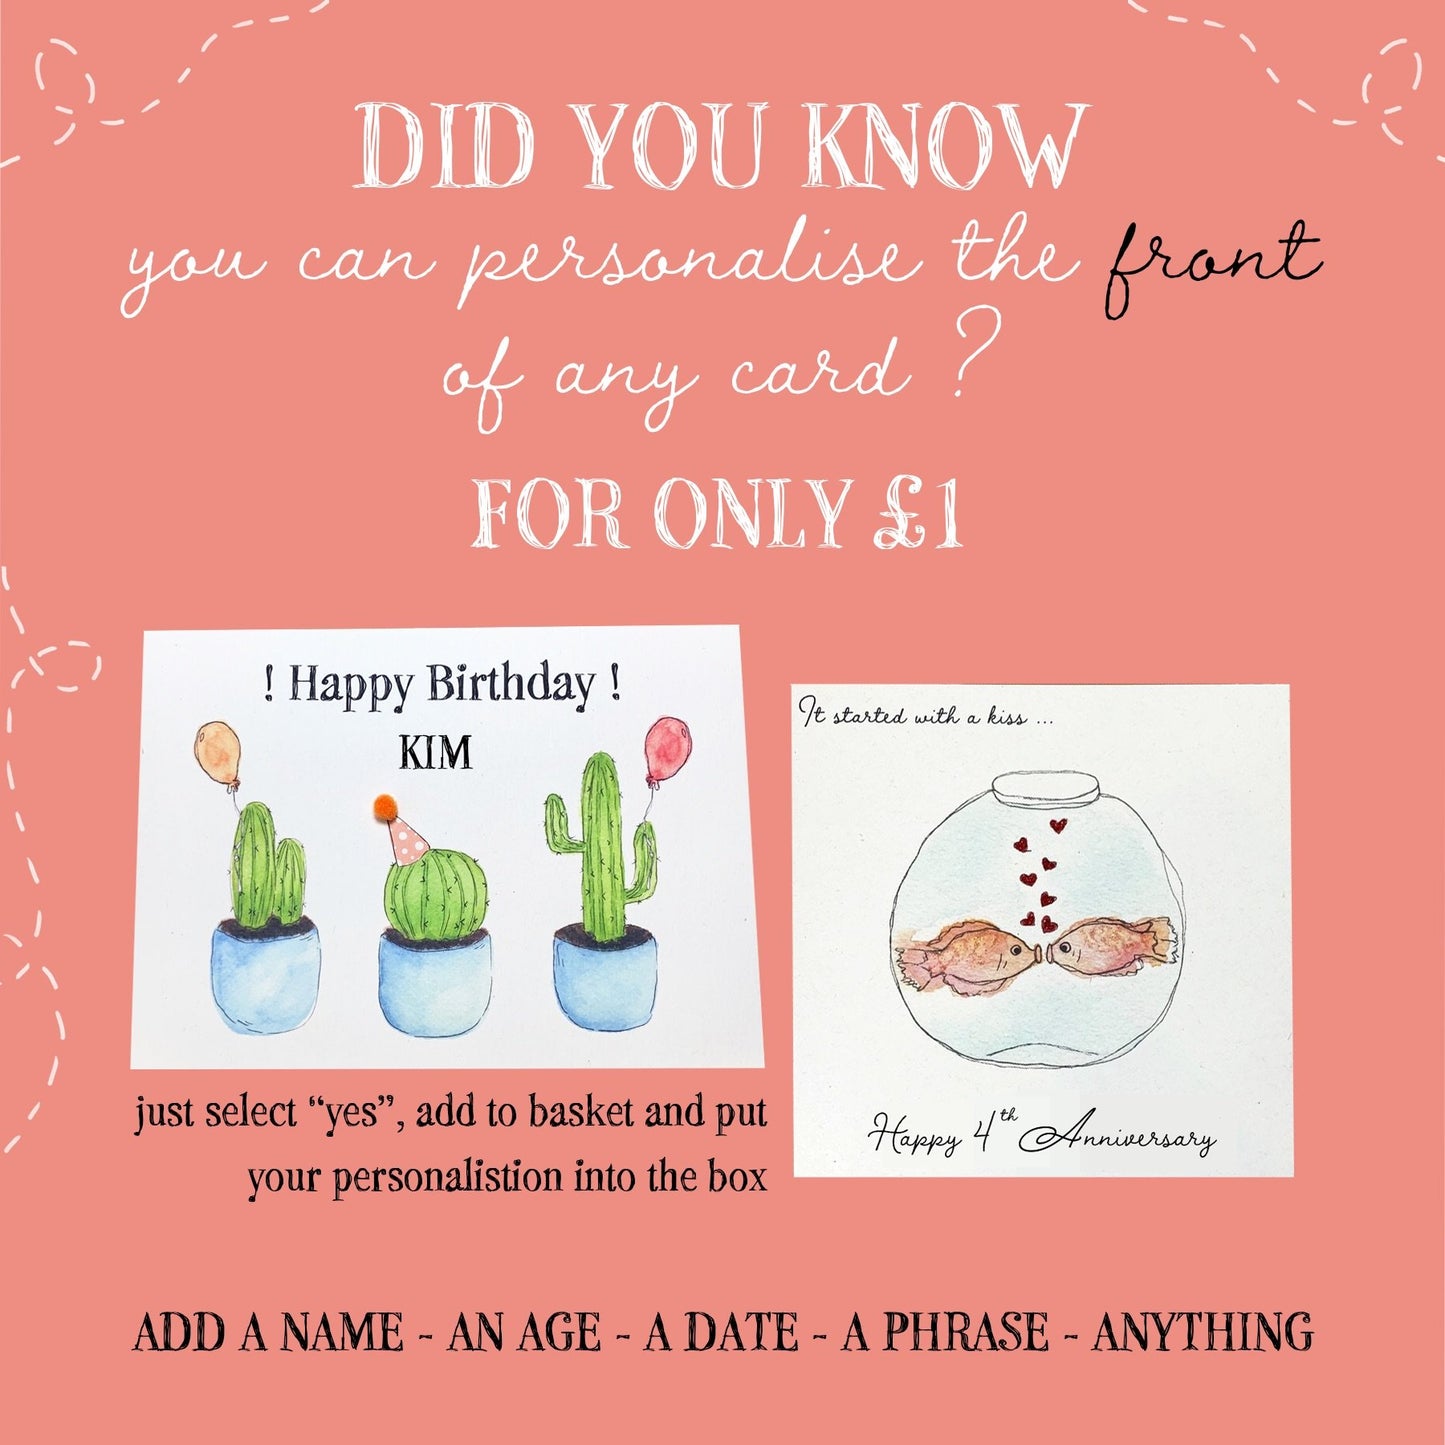 Poppy Birthday Card - Arty Bee Designs 